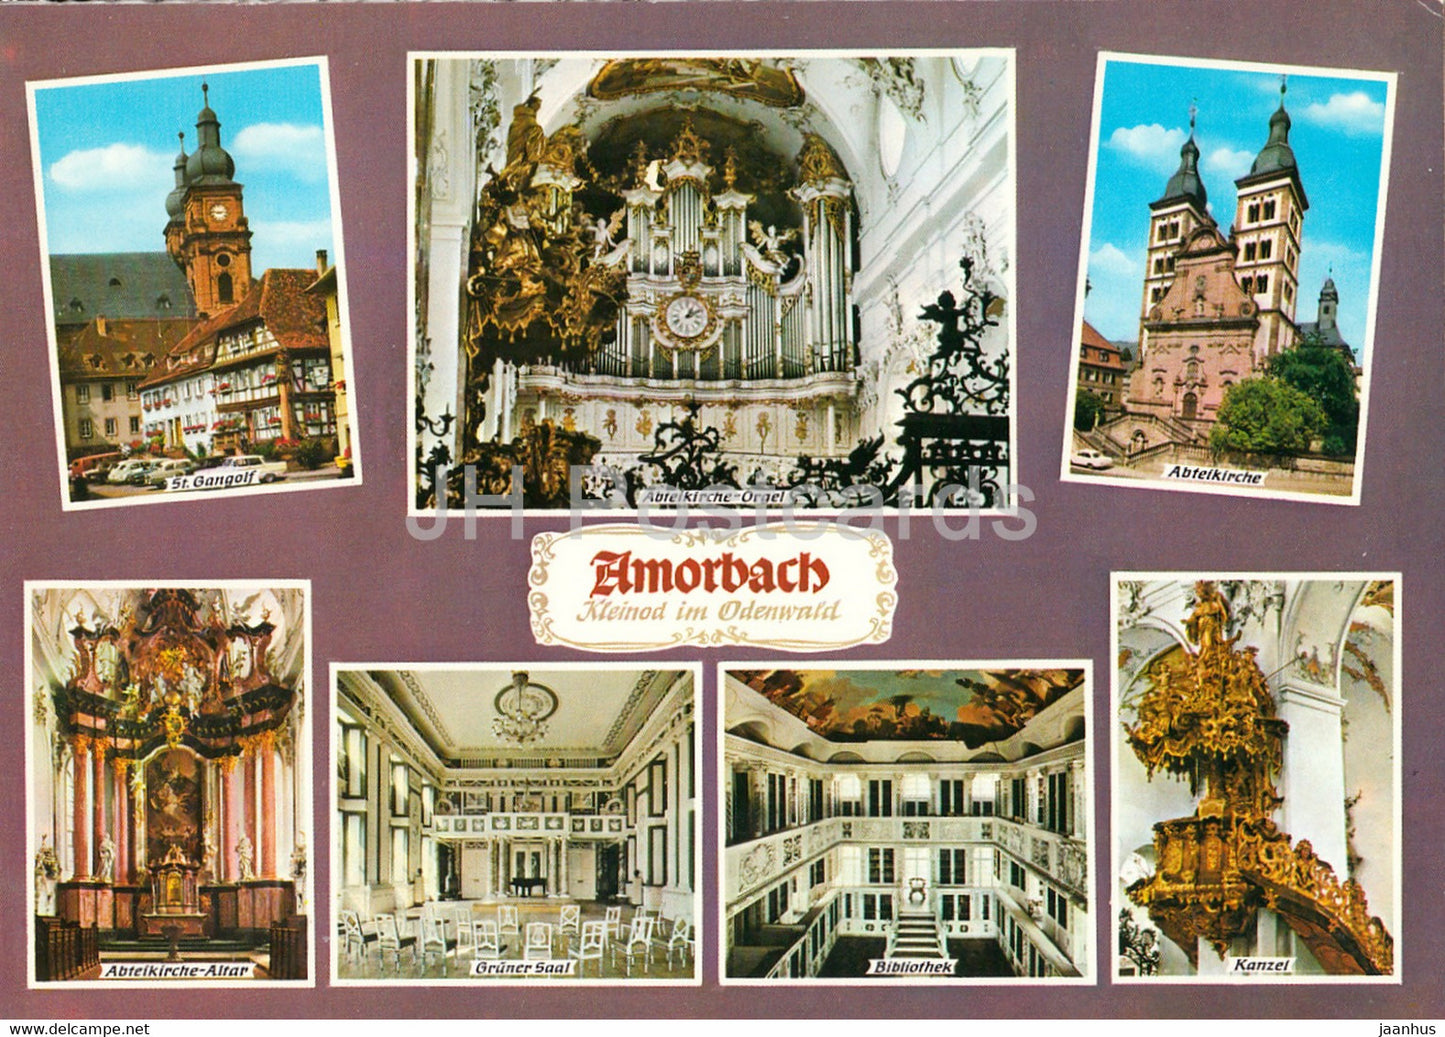 Amorbach - Abteikirche Orgel - Gruner Saal - St Gangolf - Bibliothek - Kanzel - church - Germany - unused - JH Postcards